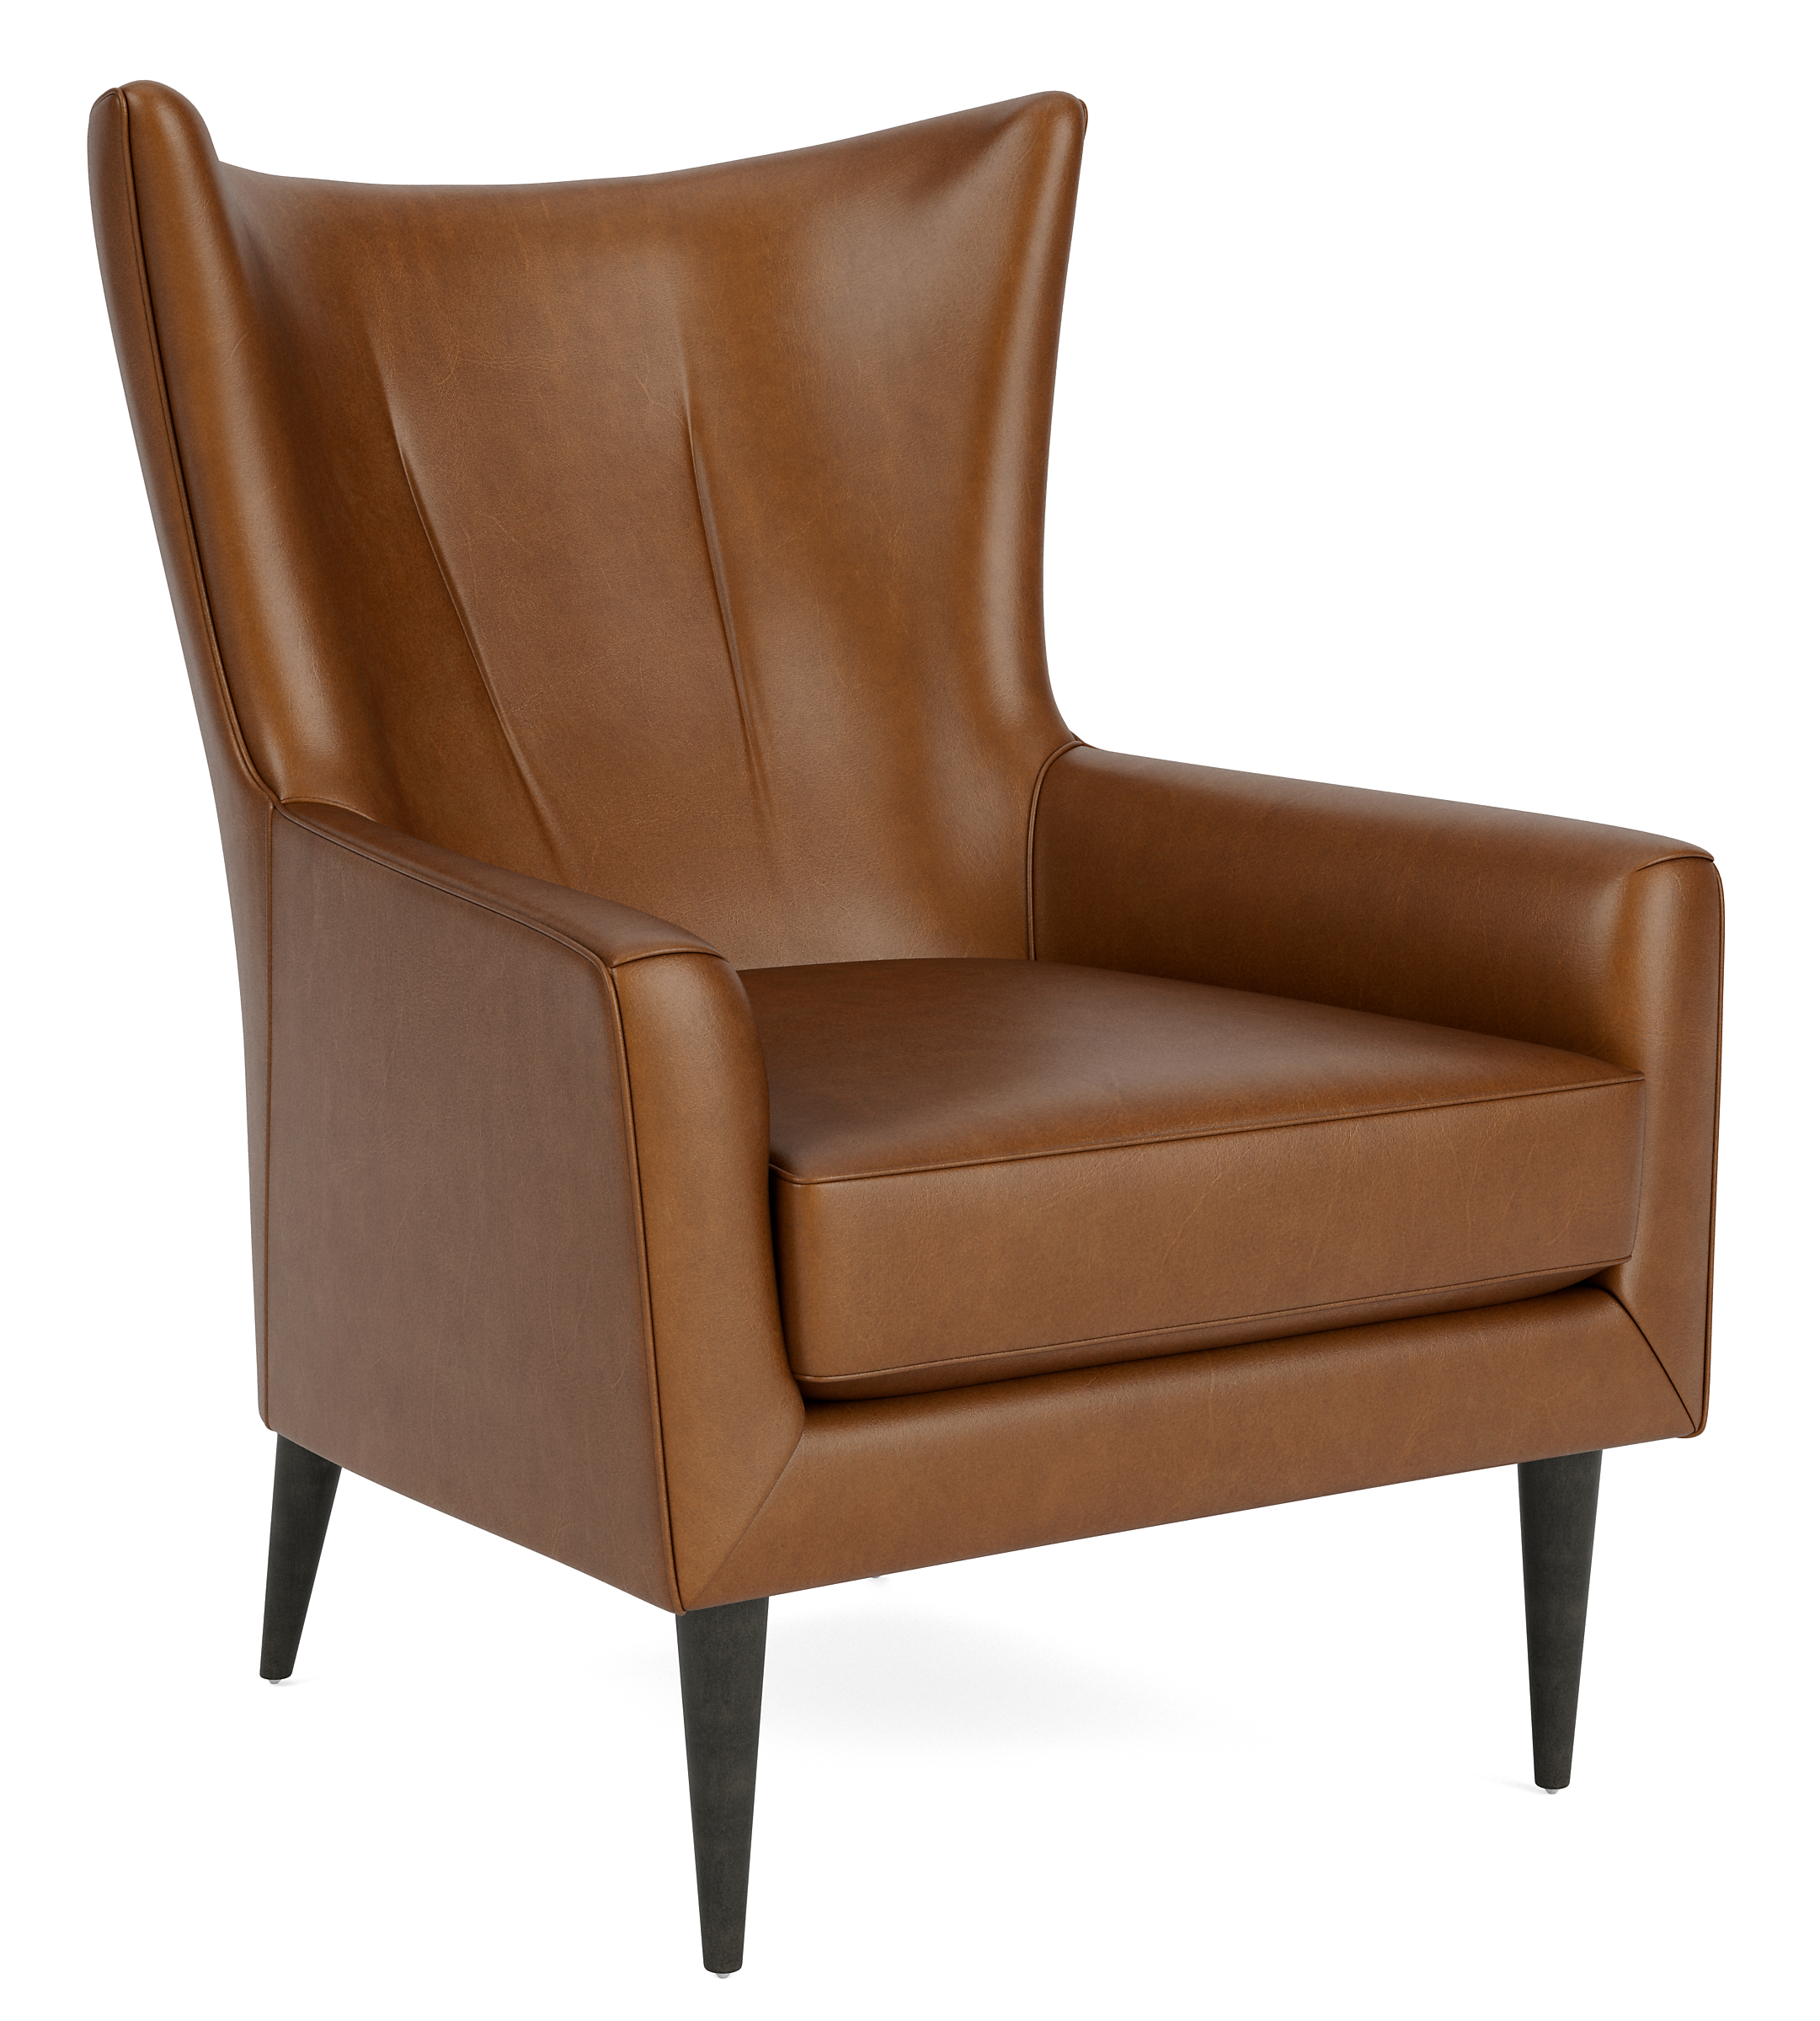 Bradford Chair in Vento Cognac Leather